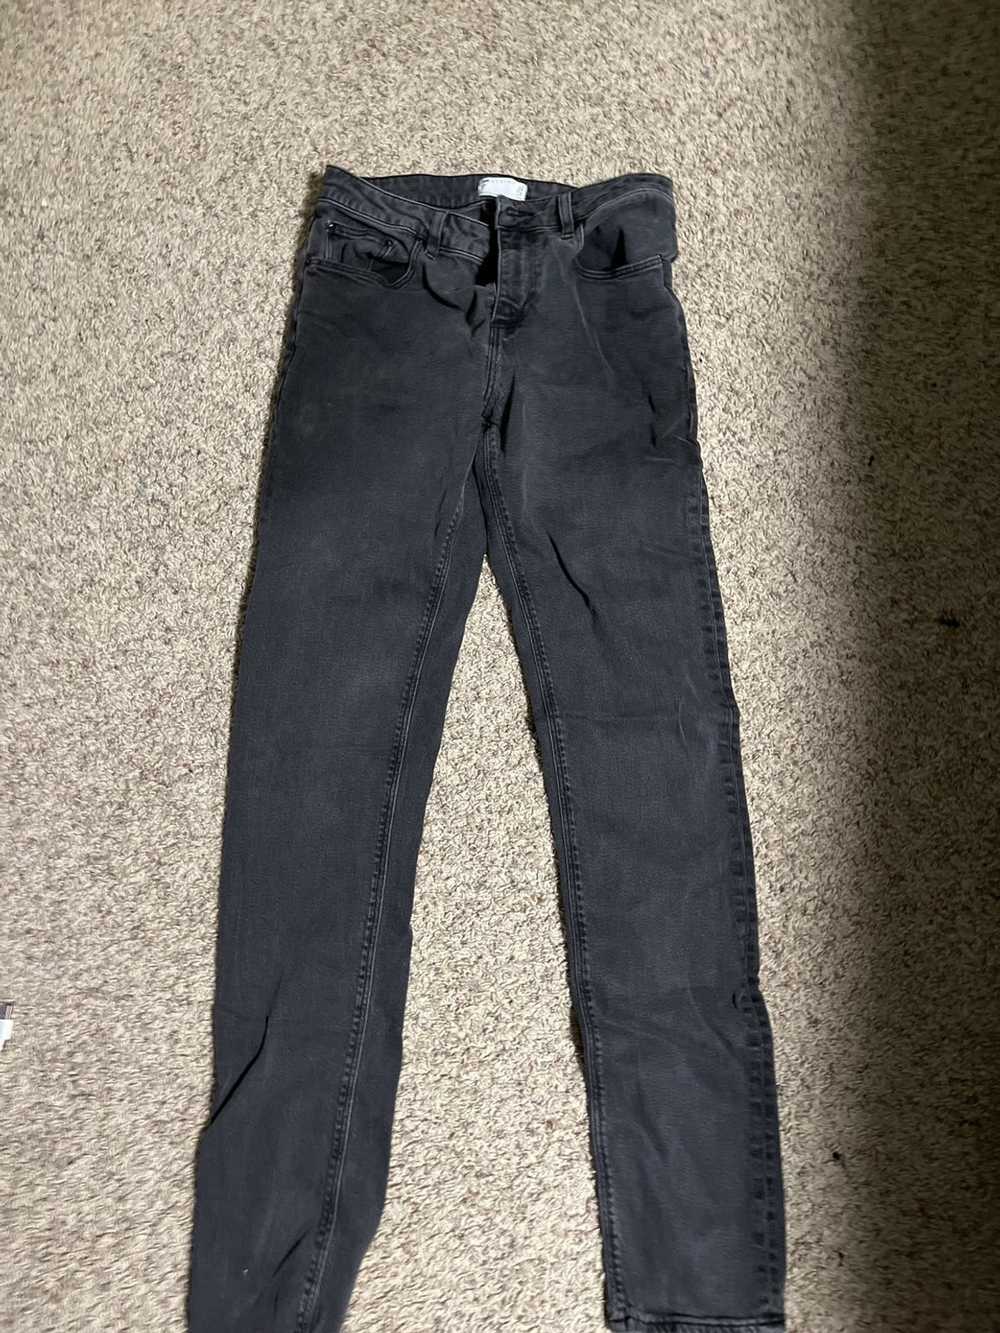 Vintage Black slim fit jeans - image 1